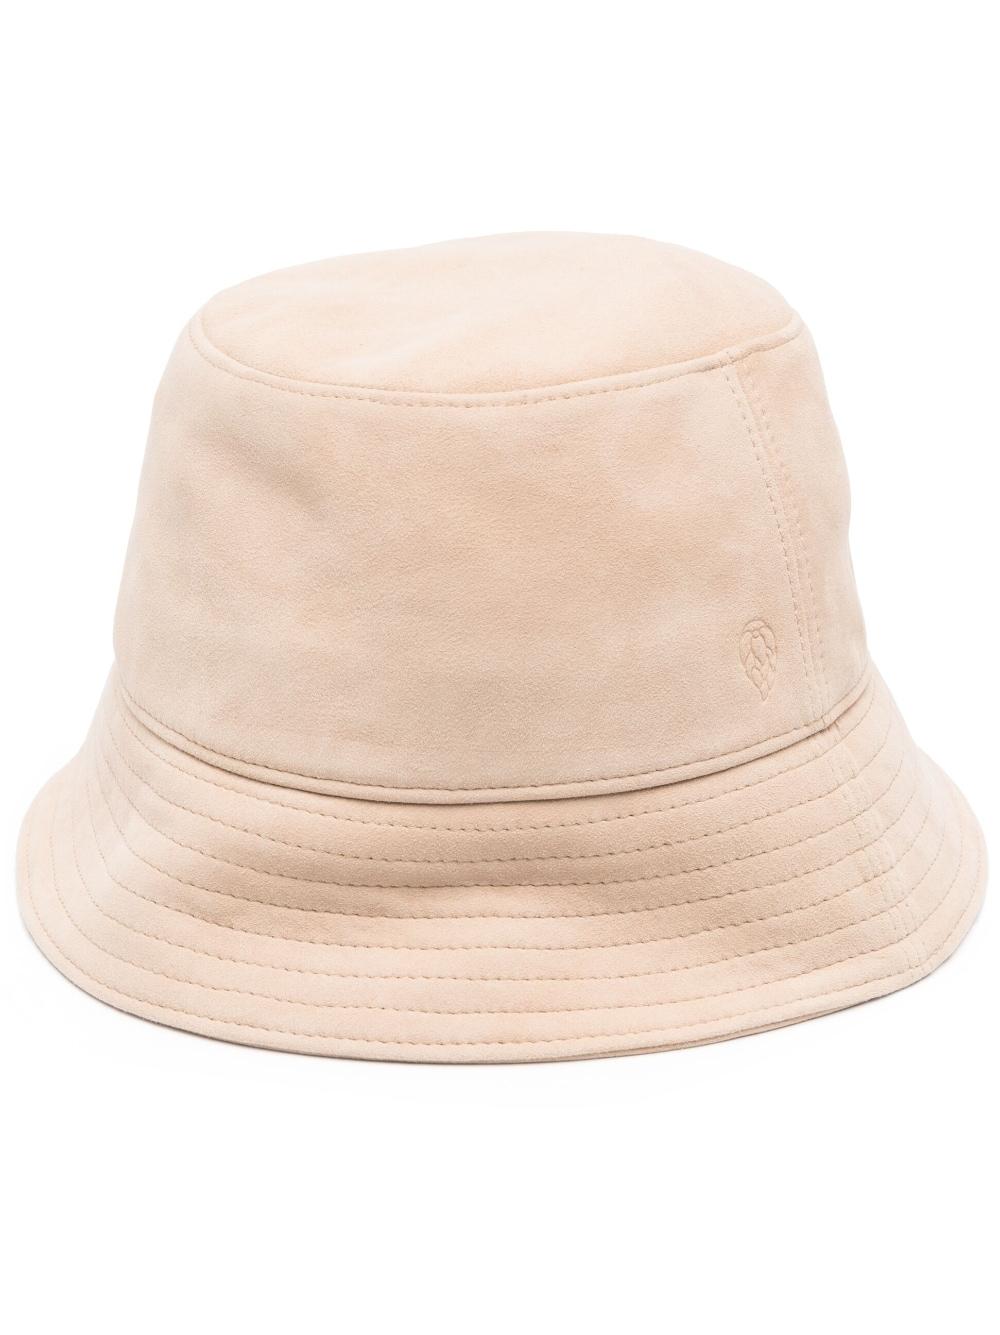 Helen Kaminski Dropped-brim Suede Bucket Hat in Natural | Lyst Canada